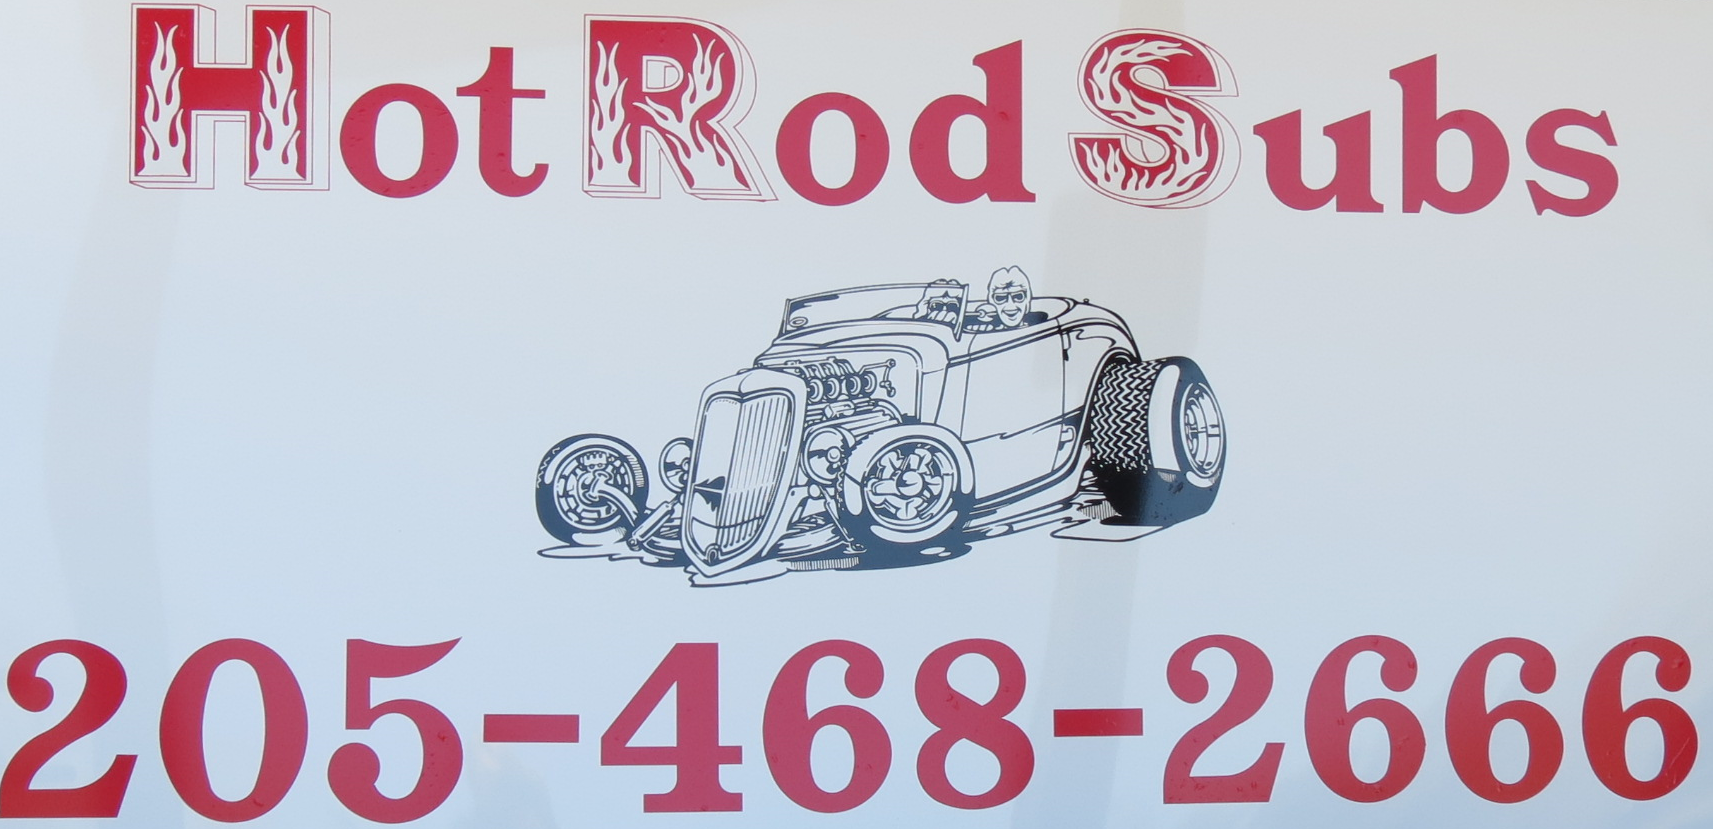 HotRod Subs Logo